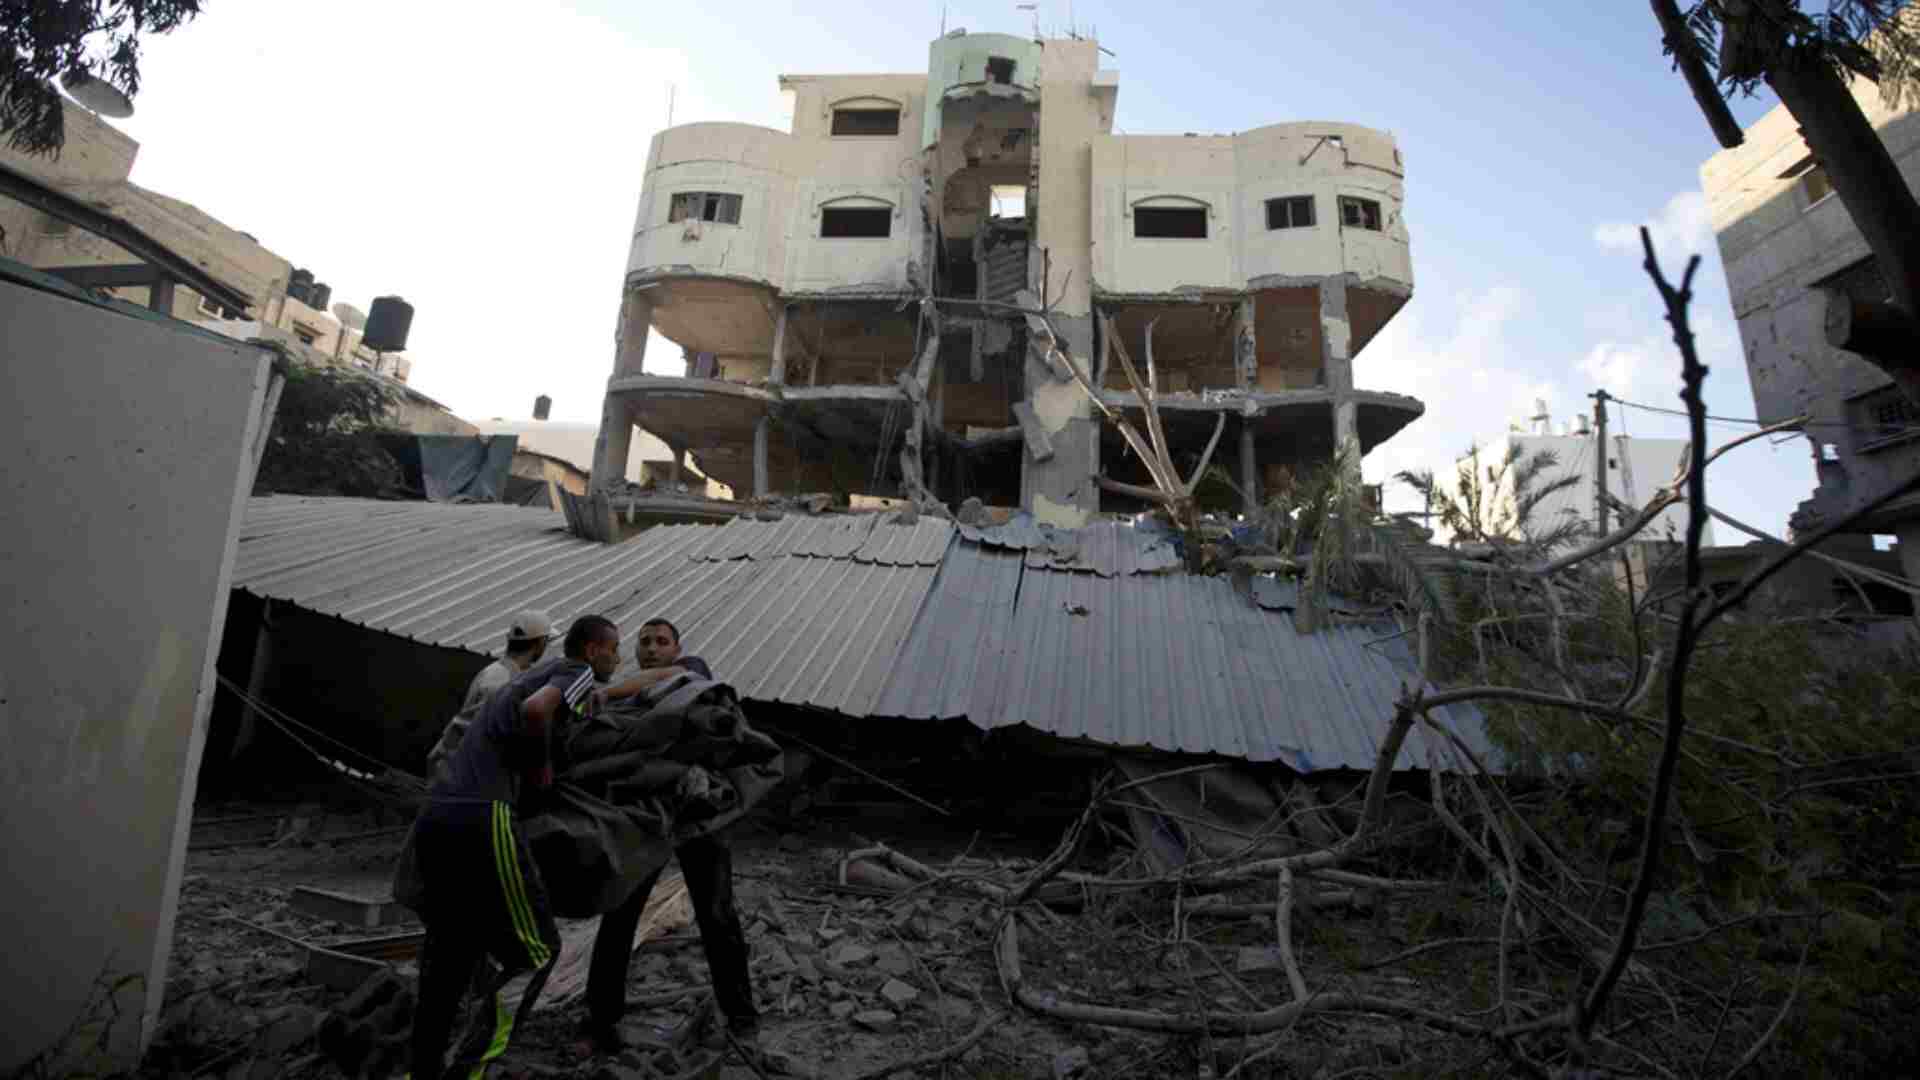 Australia, Canada, And New Zealand Call For Immediate Ceasefire In Gaza